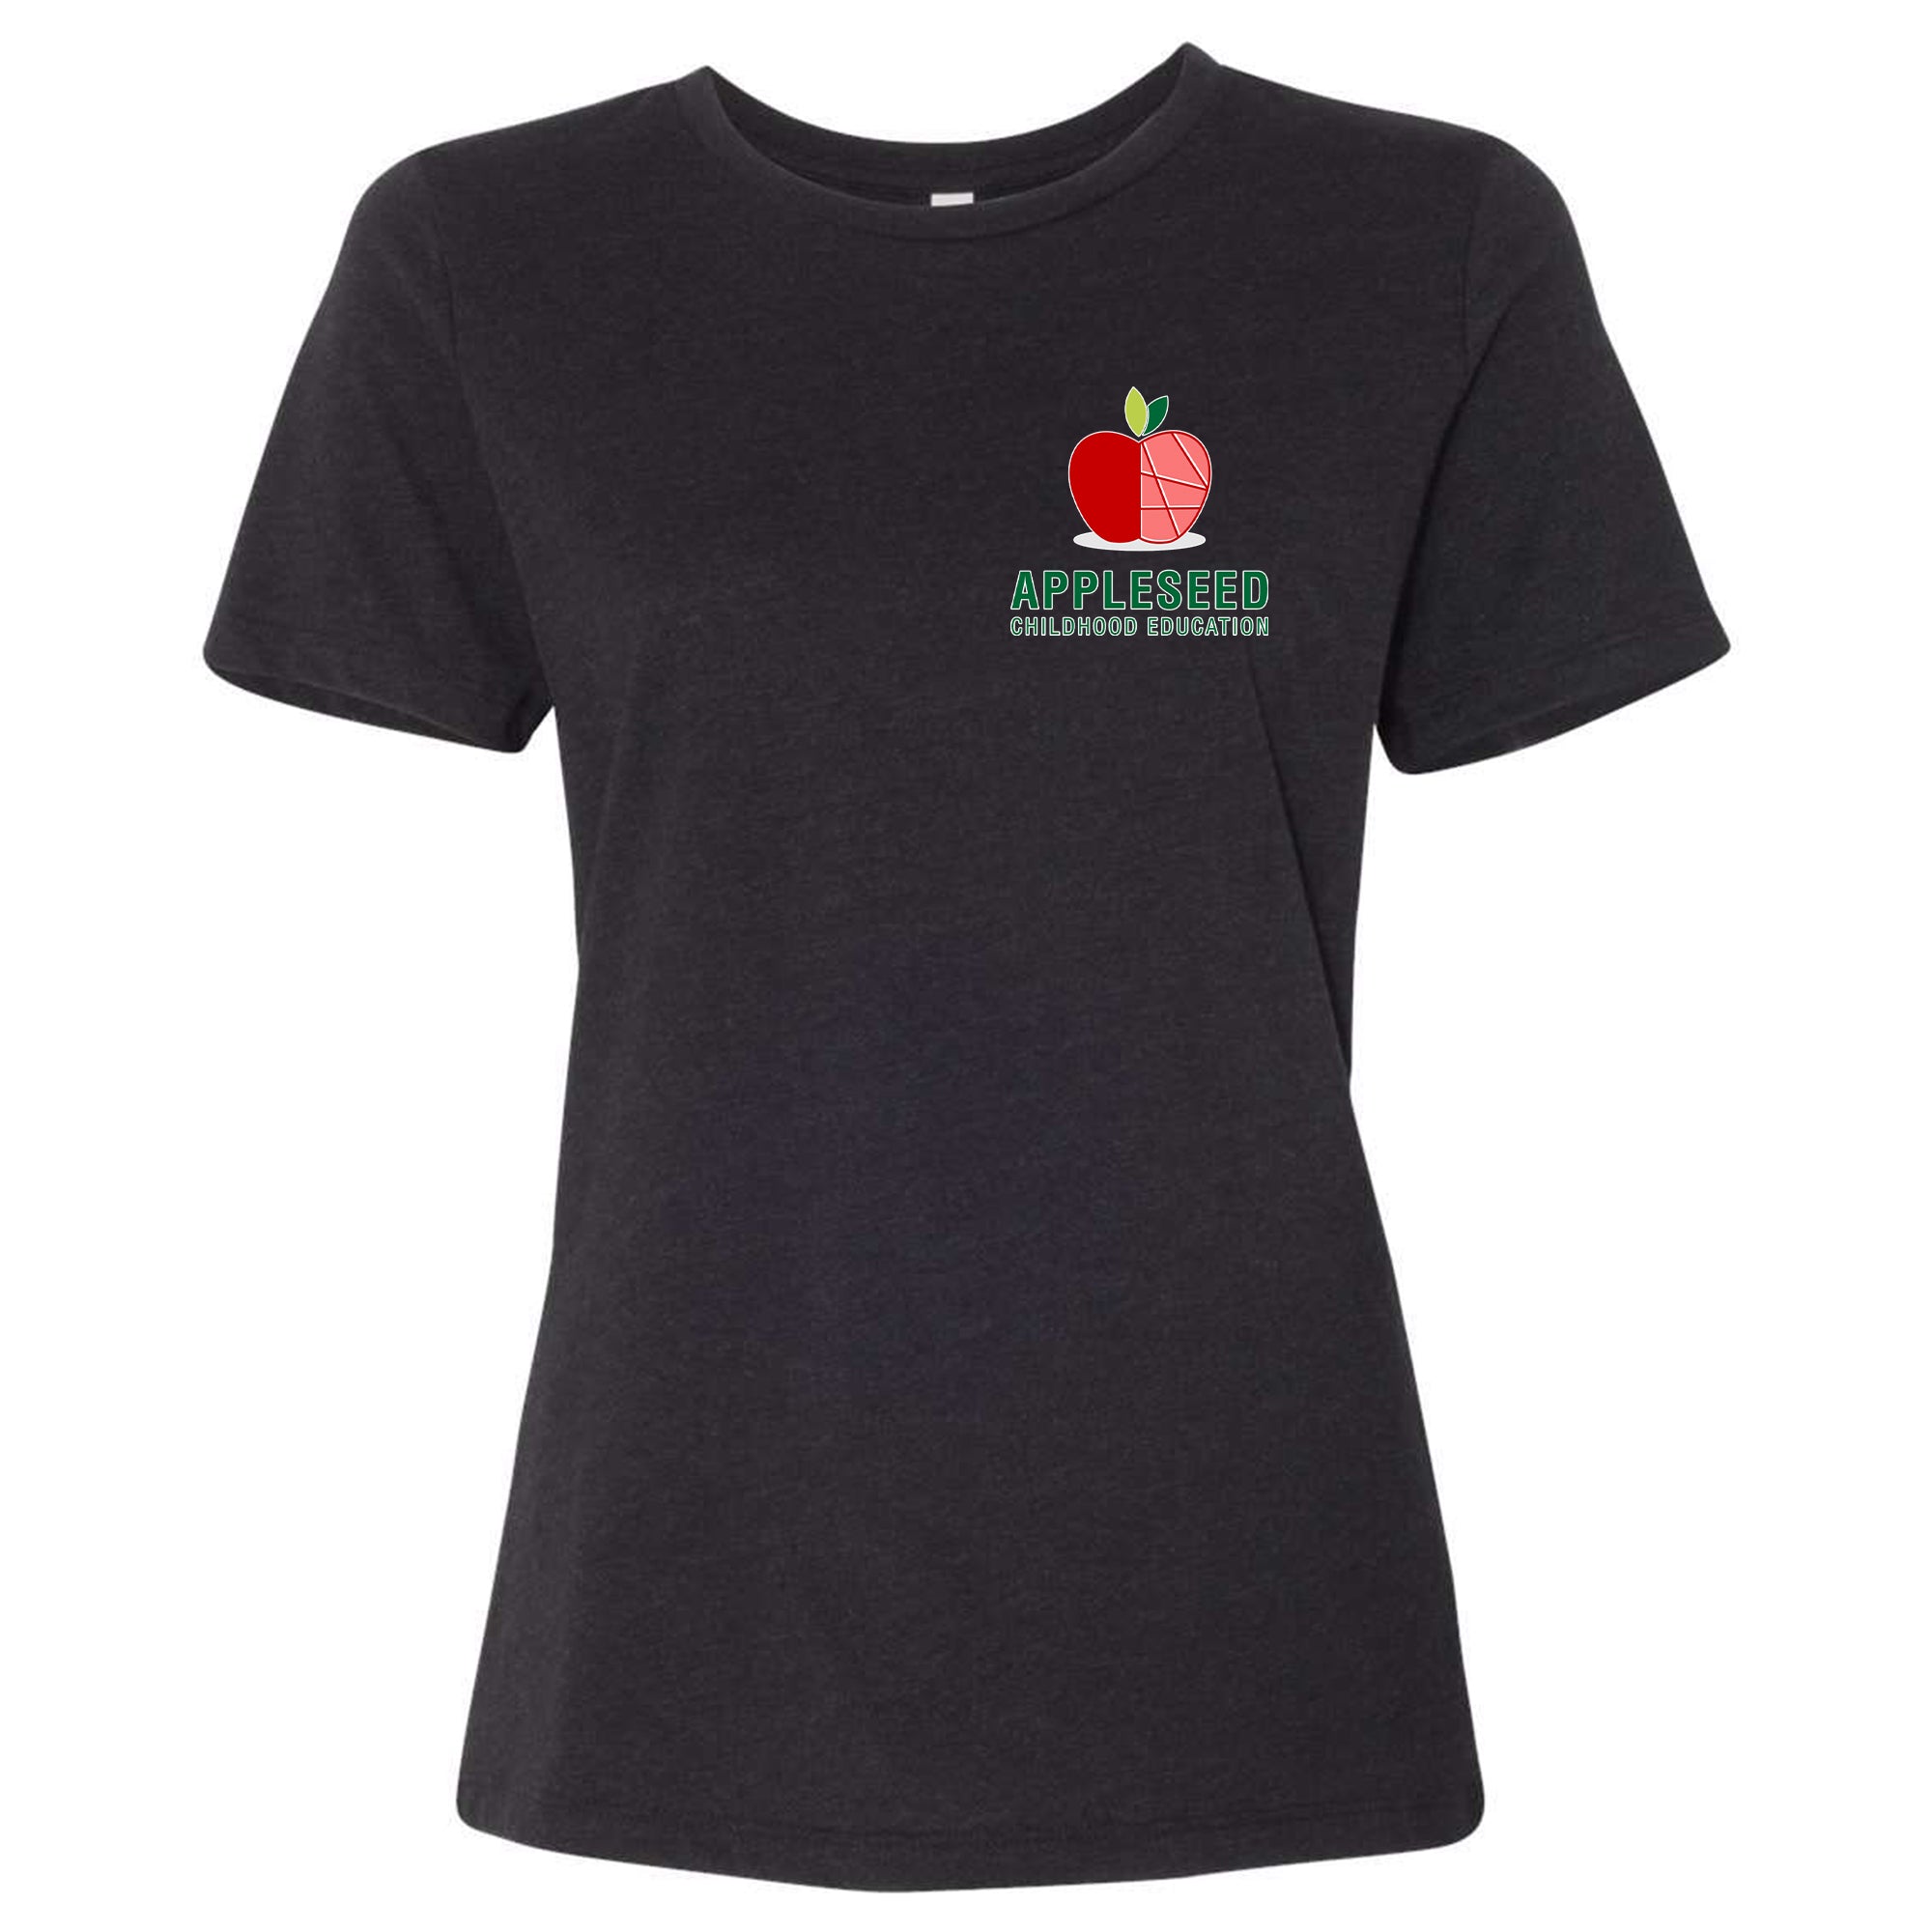 Appleseeds womens blouse size medium shopping